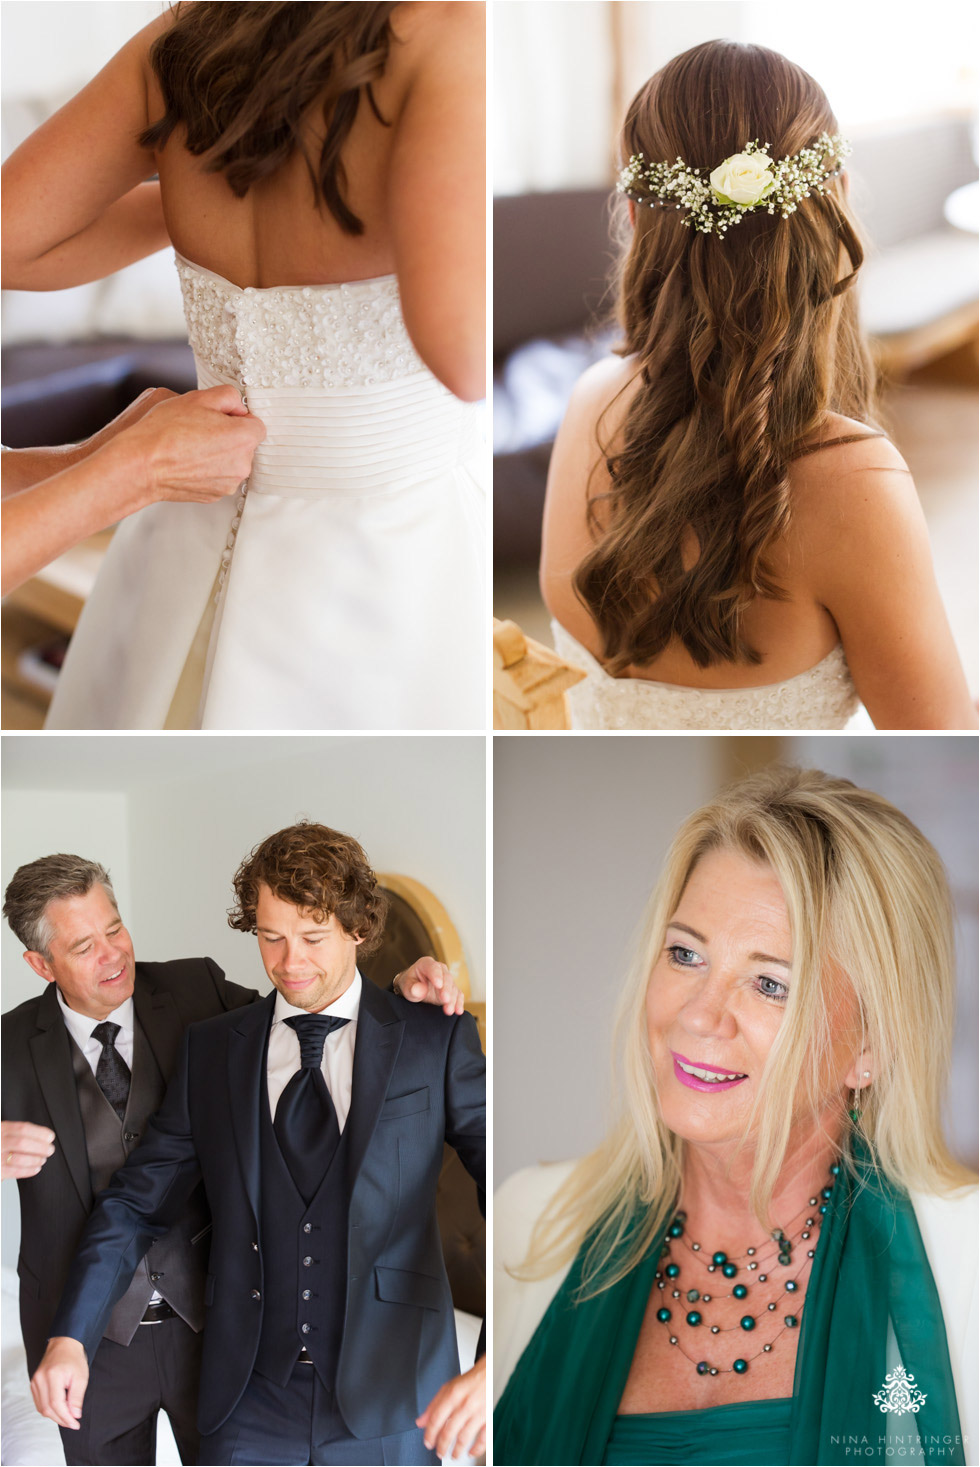 Touching wedding with M & M | Zillertal, Tyrol - Blog of Nina Hintringer Photography - Wedding Photography, Wedding Reportage and Destination Weddings